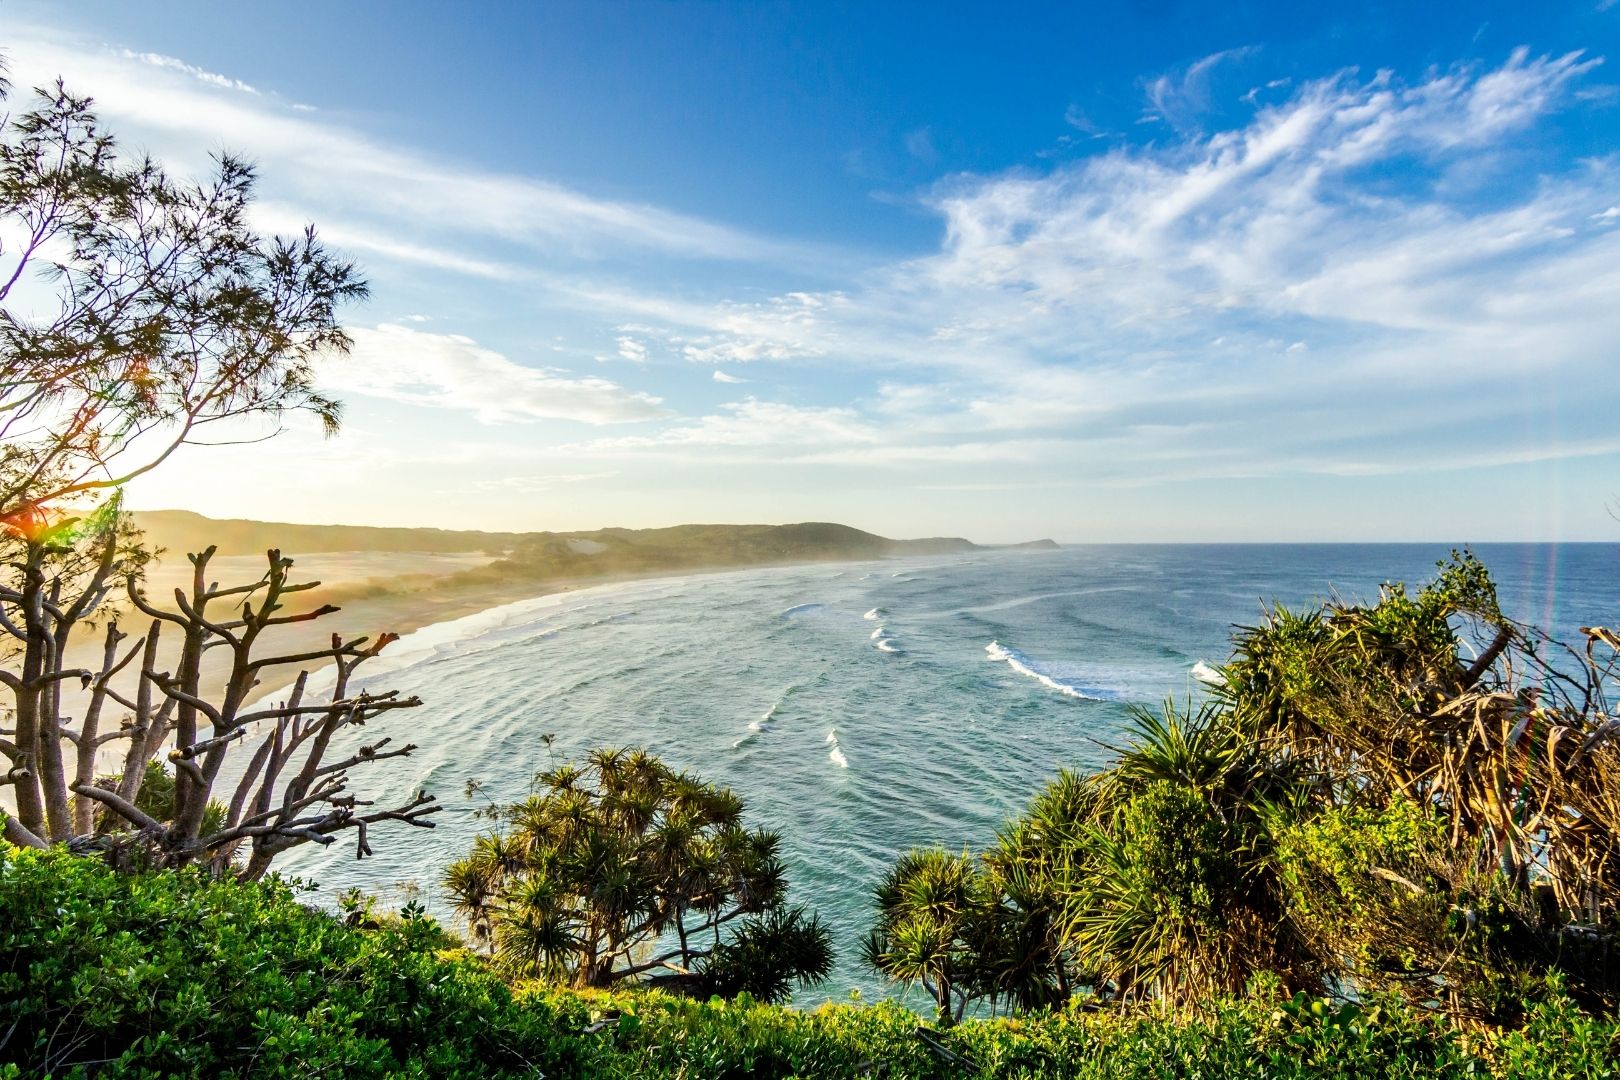 Keep Australia Beautiful Week scenic shot overlooking a beach